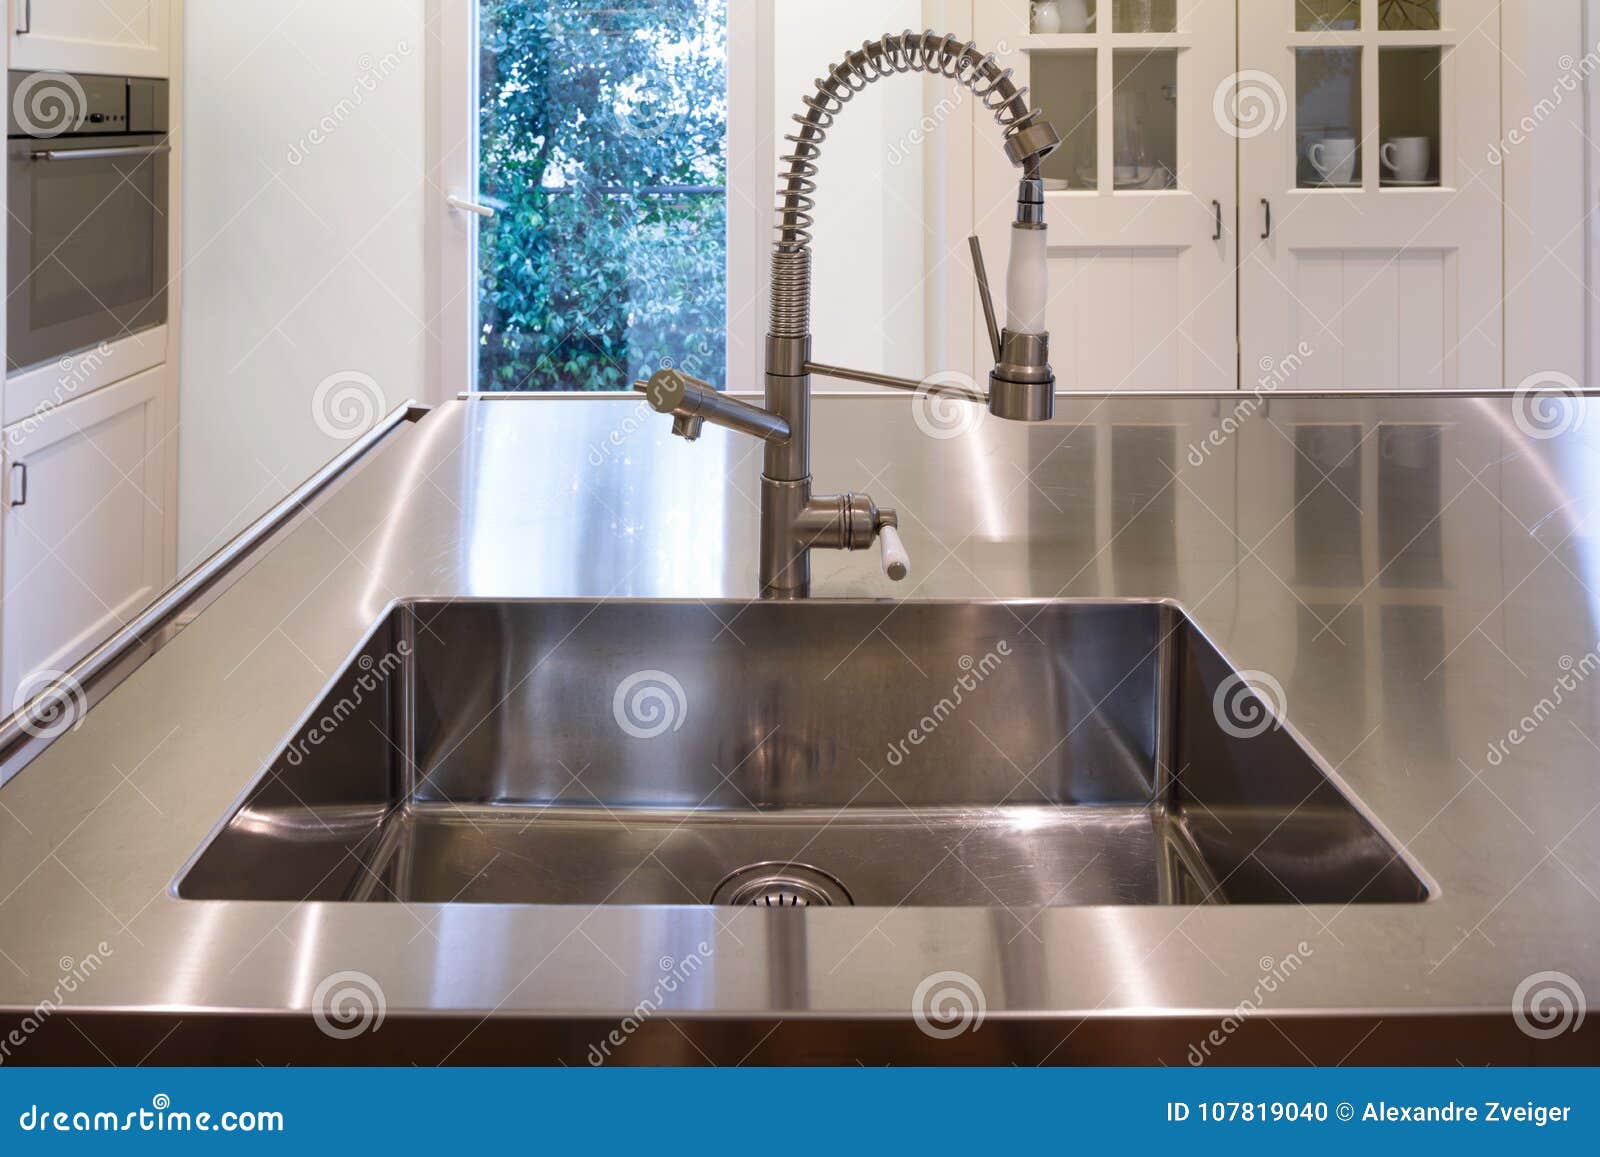 closeup of sink